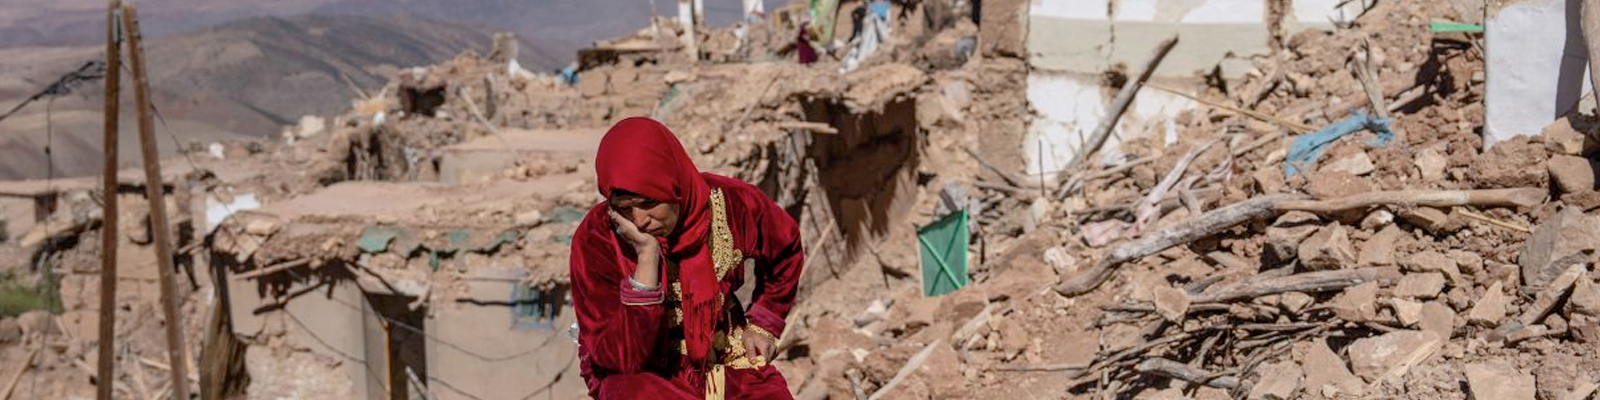 A Prayer for the Earthquake Survivors in Morocco